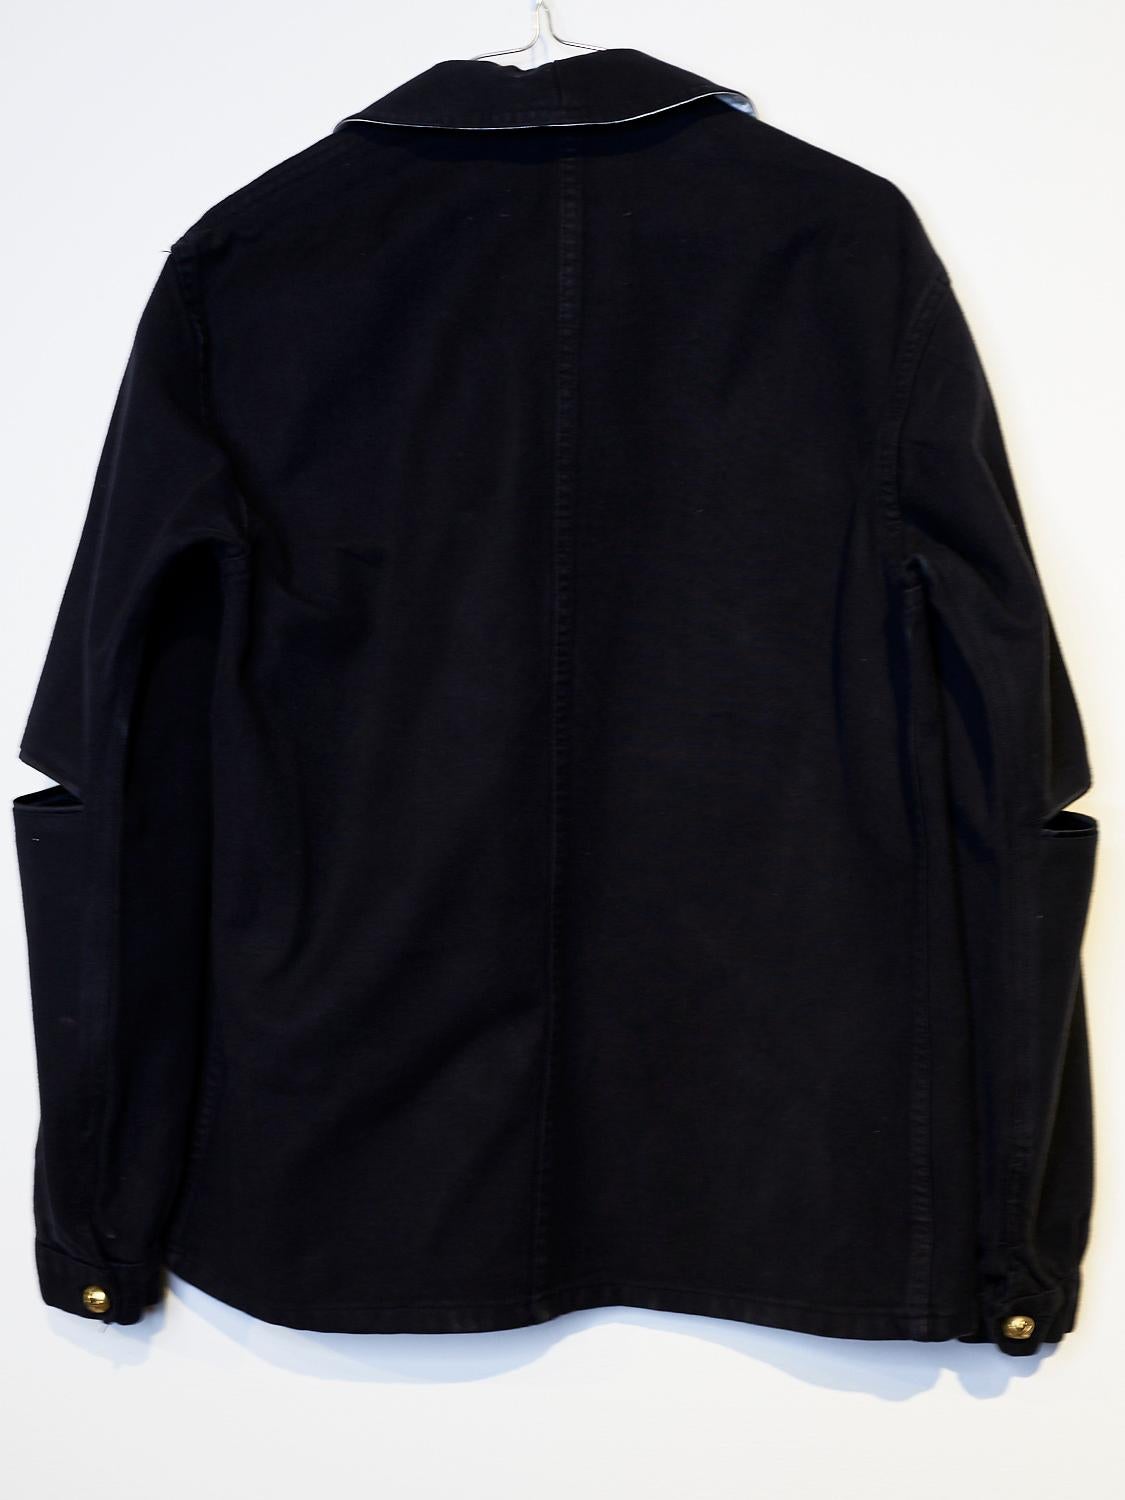 Blazer Jacket Black Bird Tweed Pockets White Silk Collar Embellished  J Dauphin 4